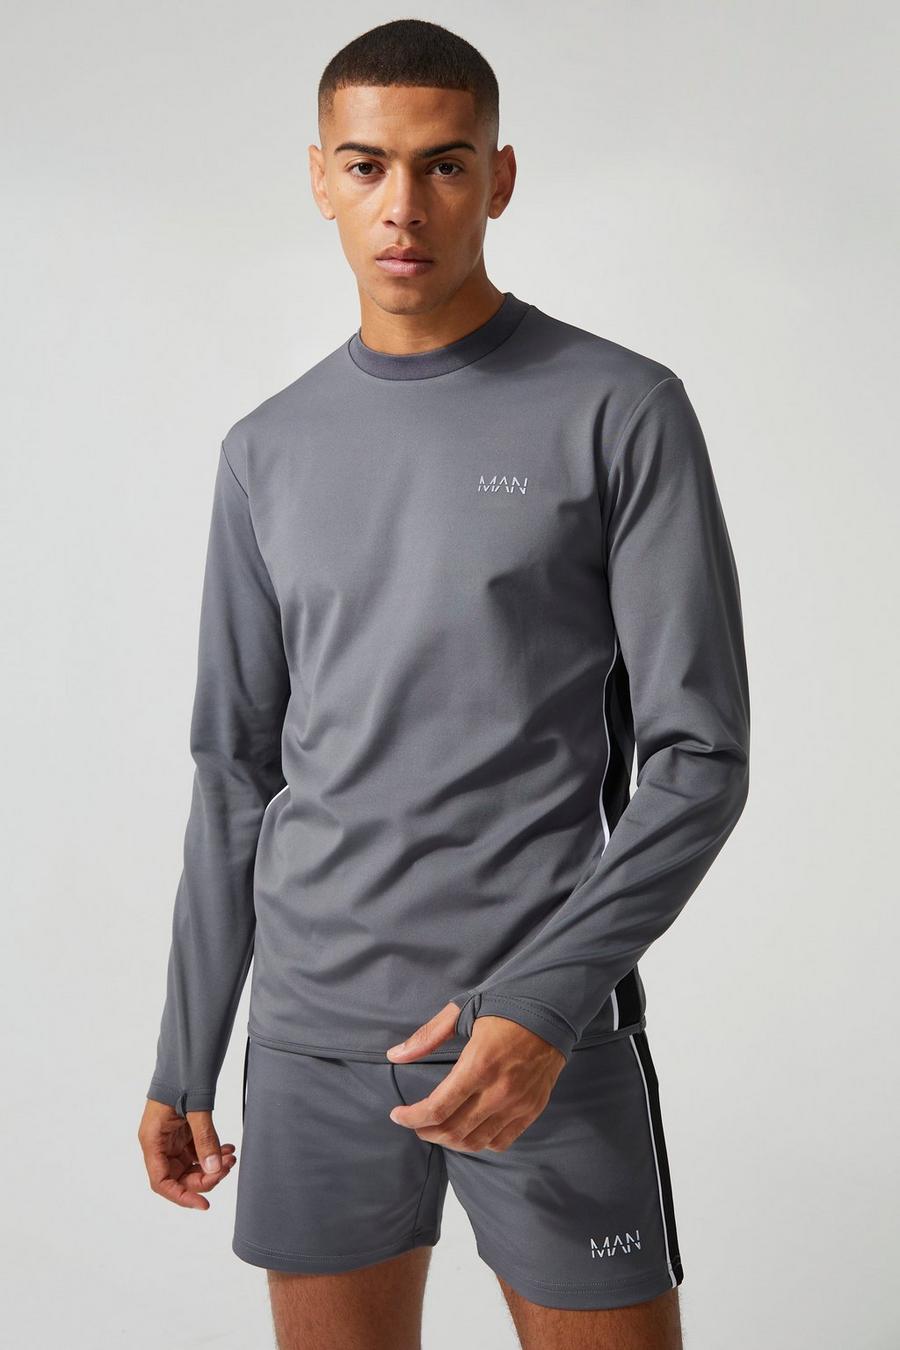 Charcoal grey Man Active Training Sweatshirt